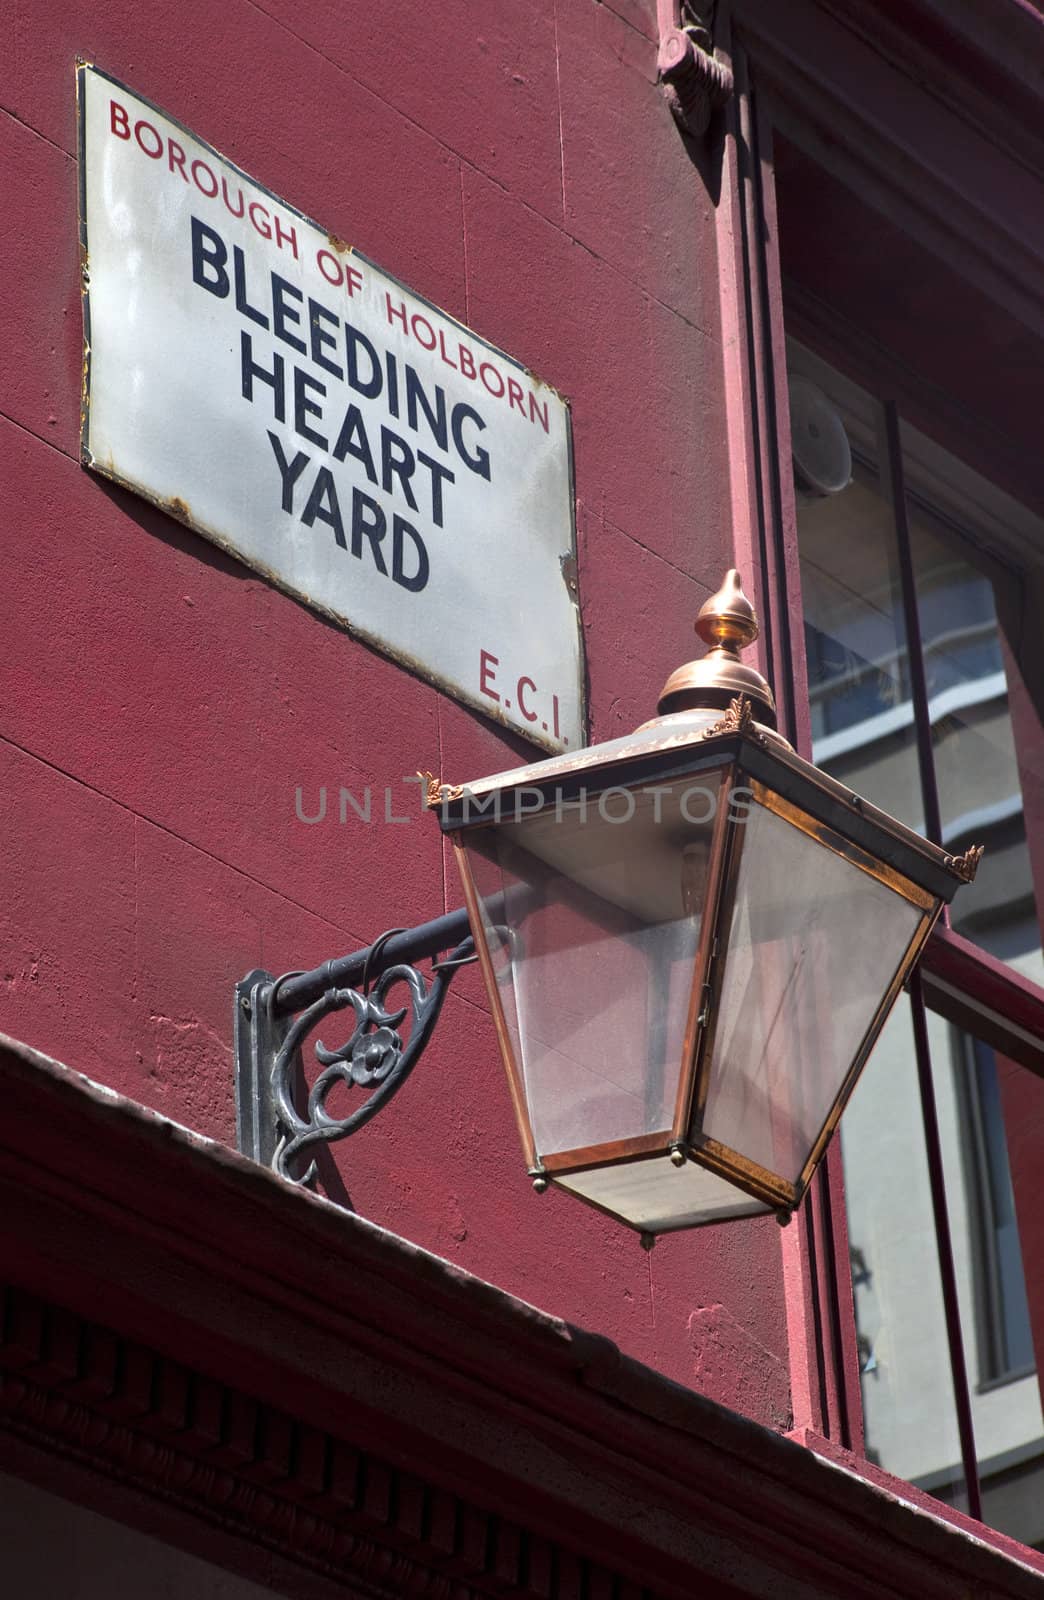 Bleeding Hart Yard in London by chrisdorney